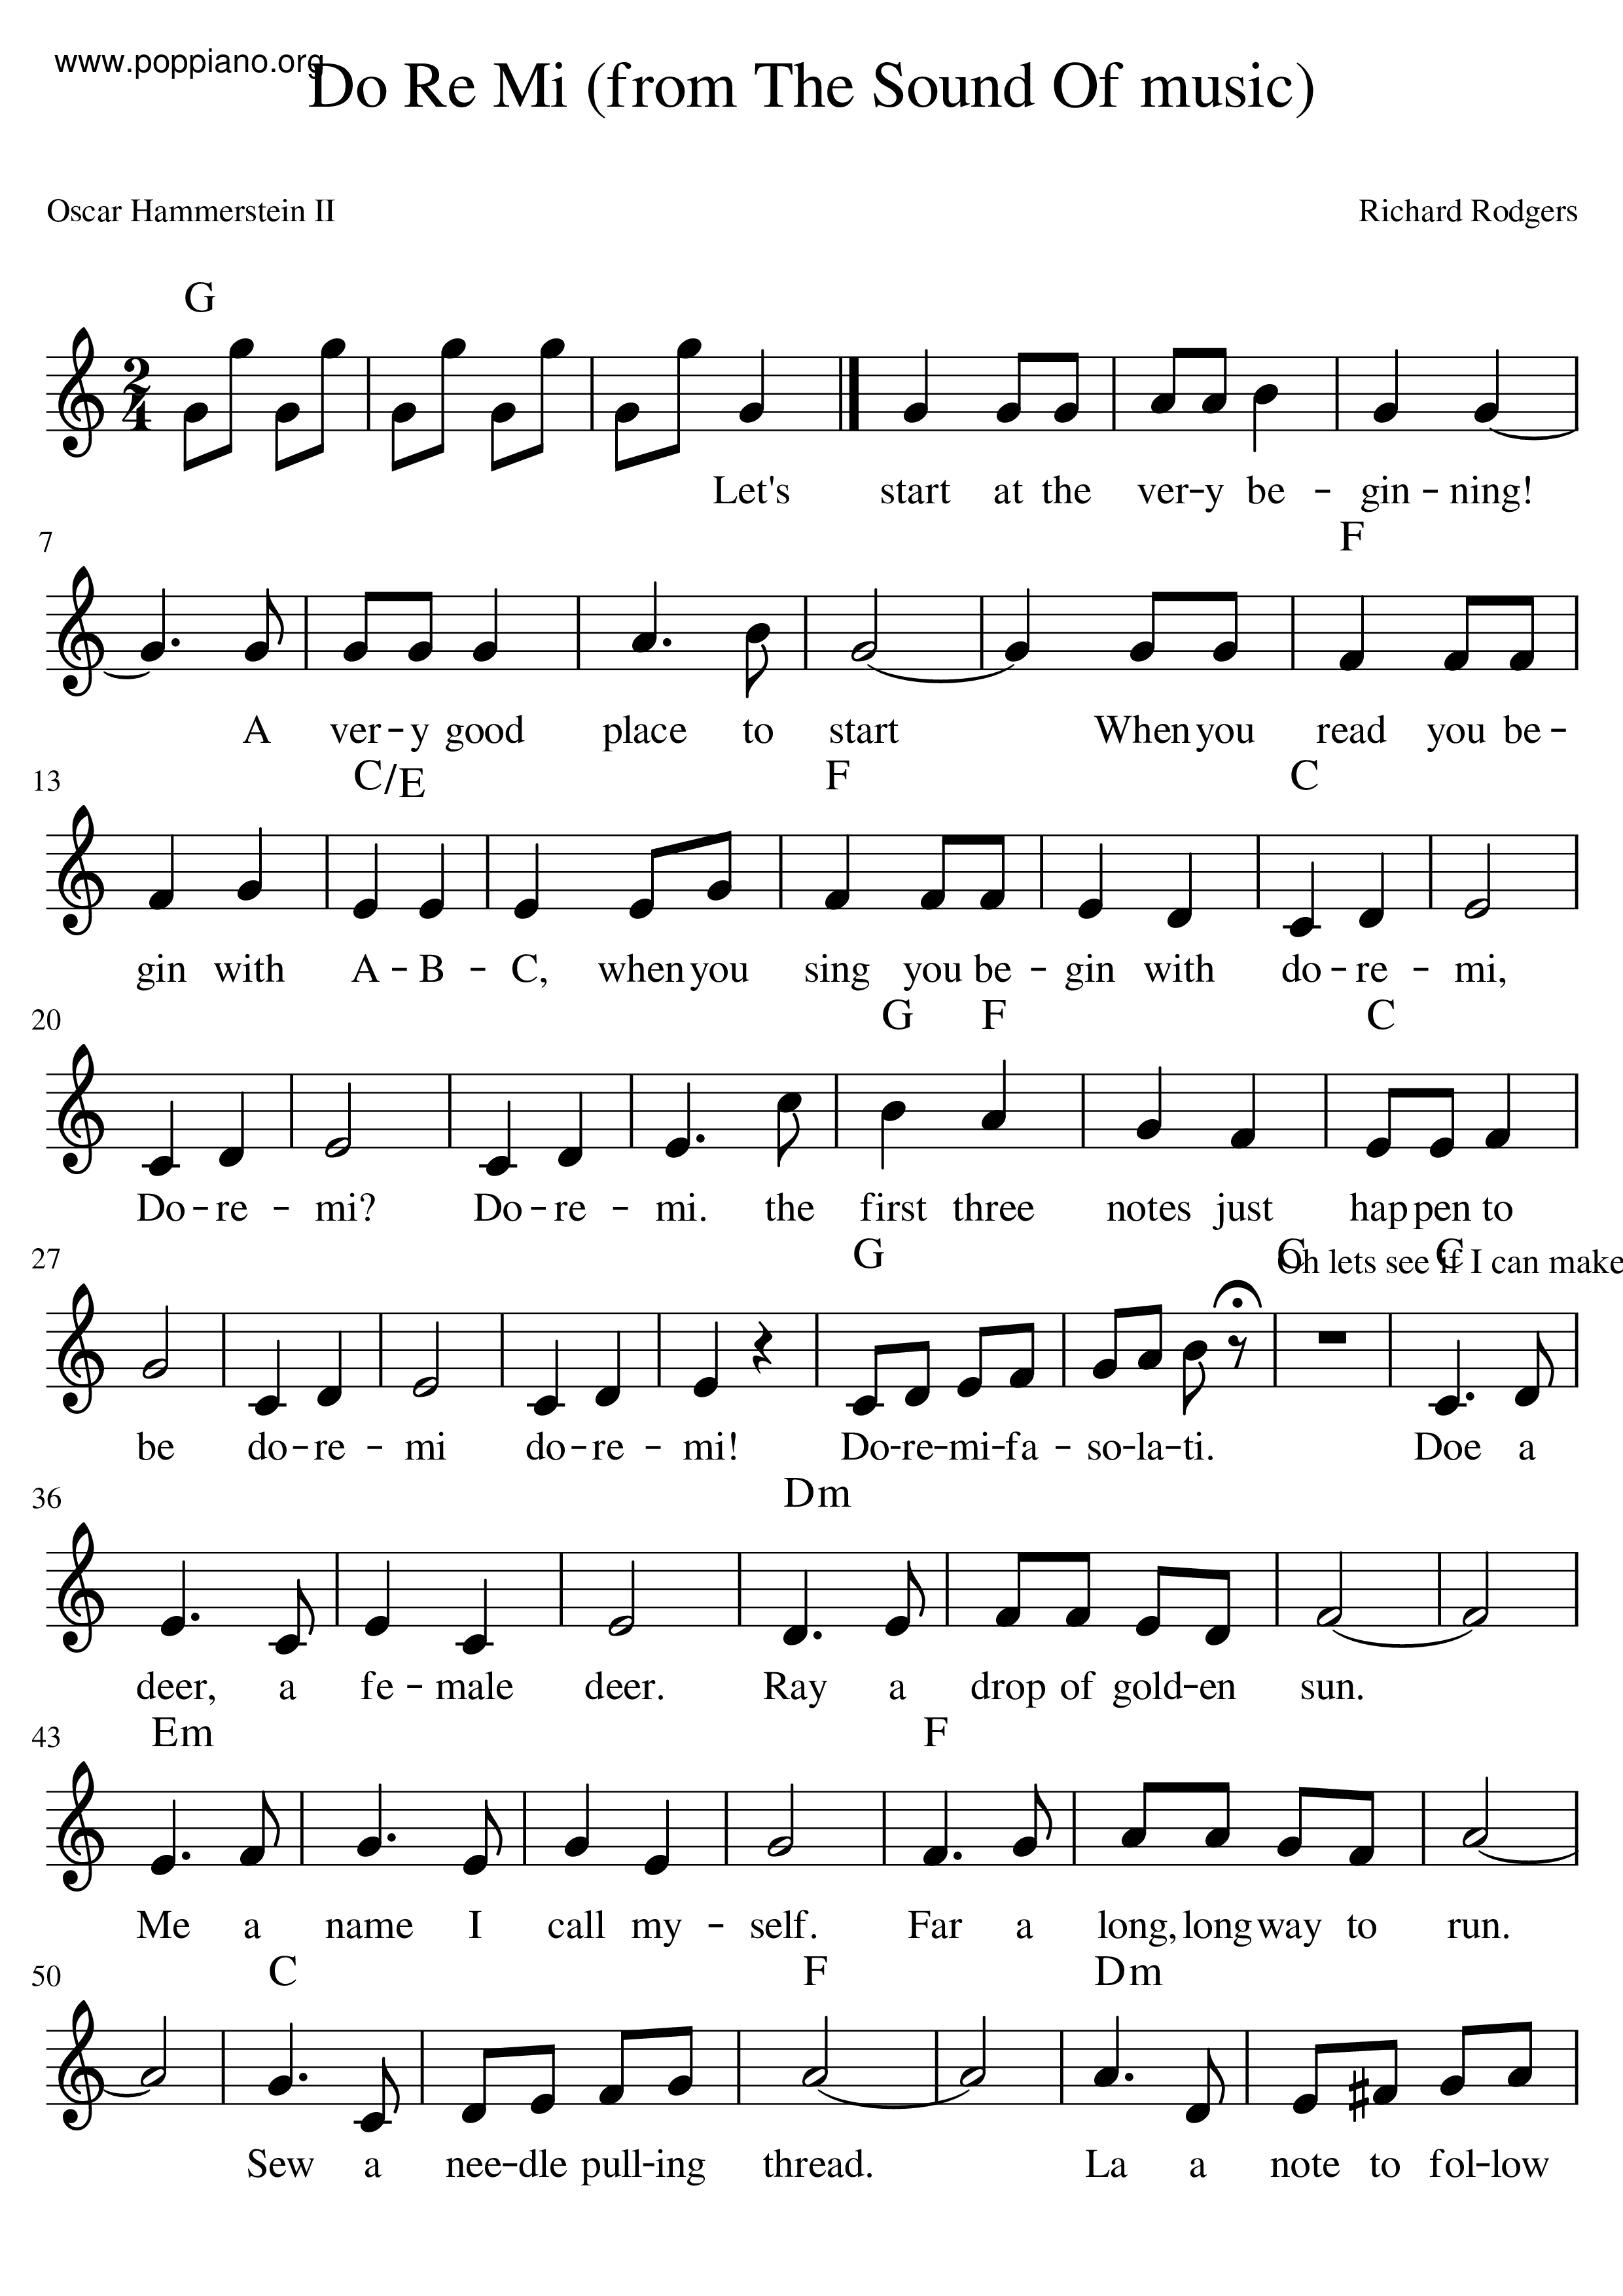 The Sound Of Music - Do-Re-Mi Score